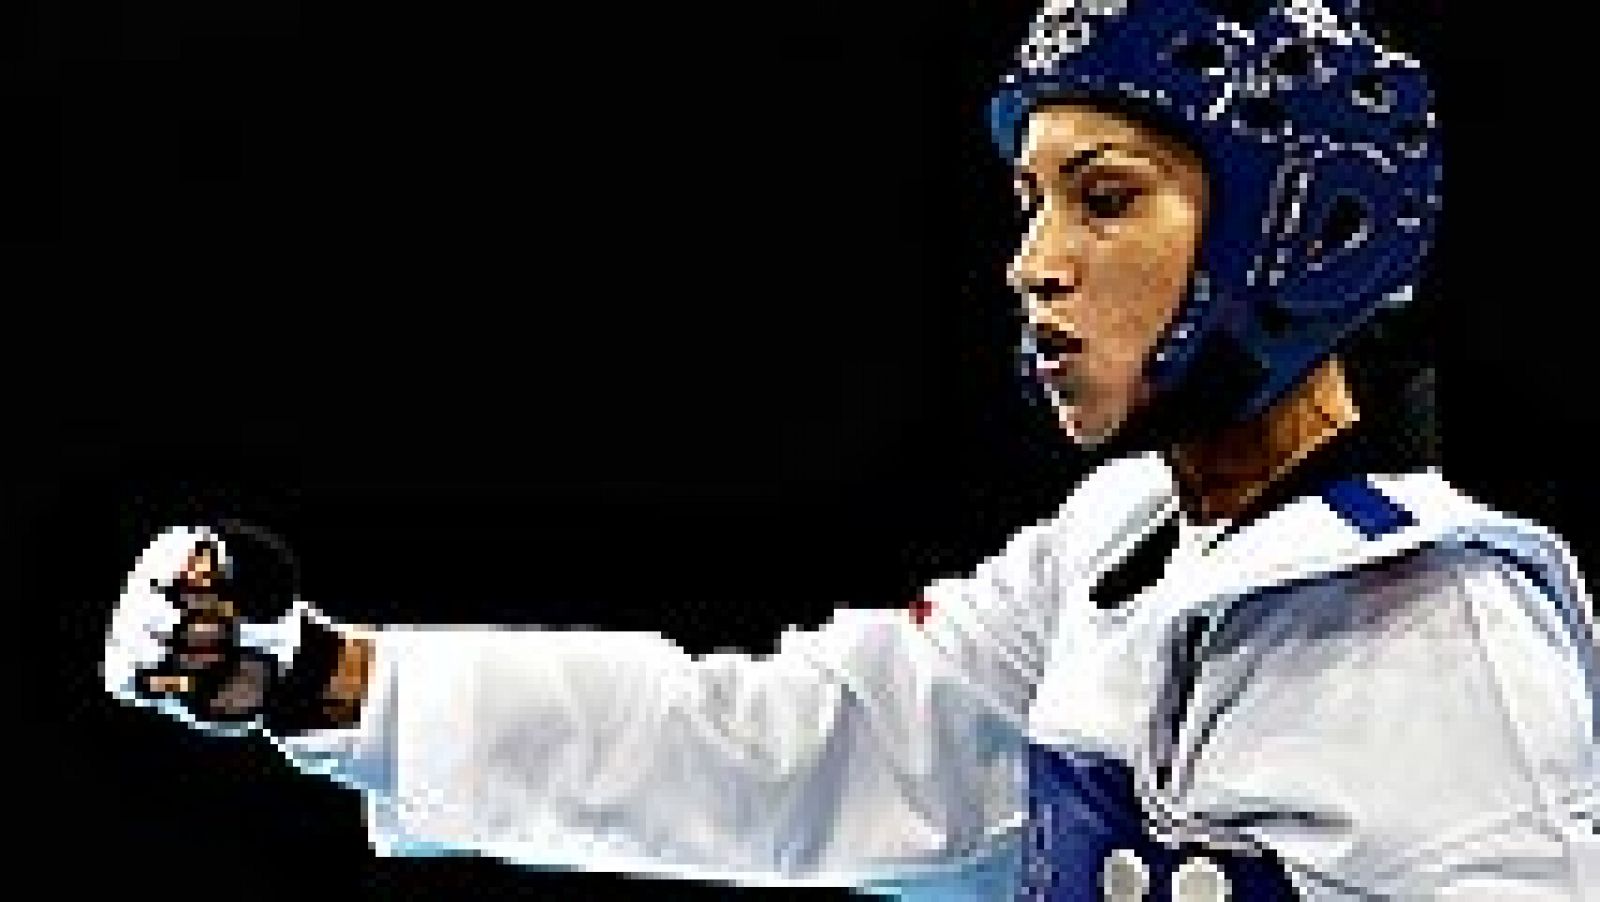 Telediario 1: La medallista olímpica Brigitte Yagüe dice adiós al taekwondo de competición | RTVE Play